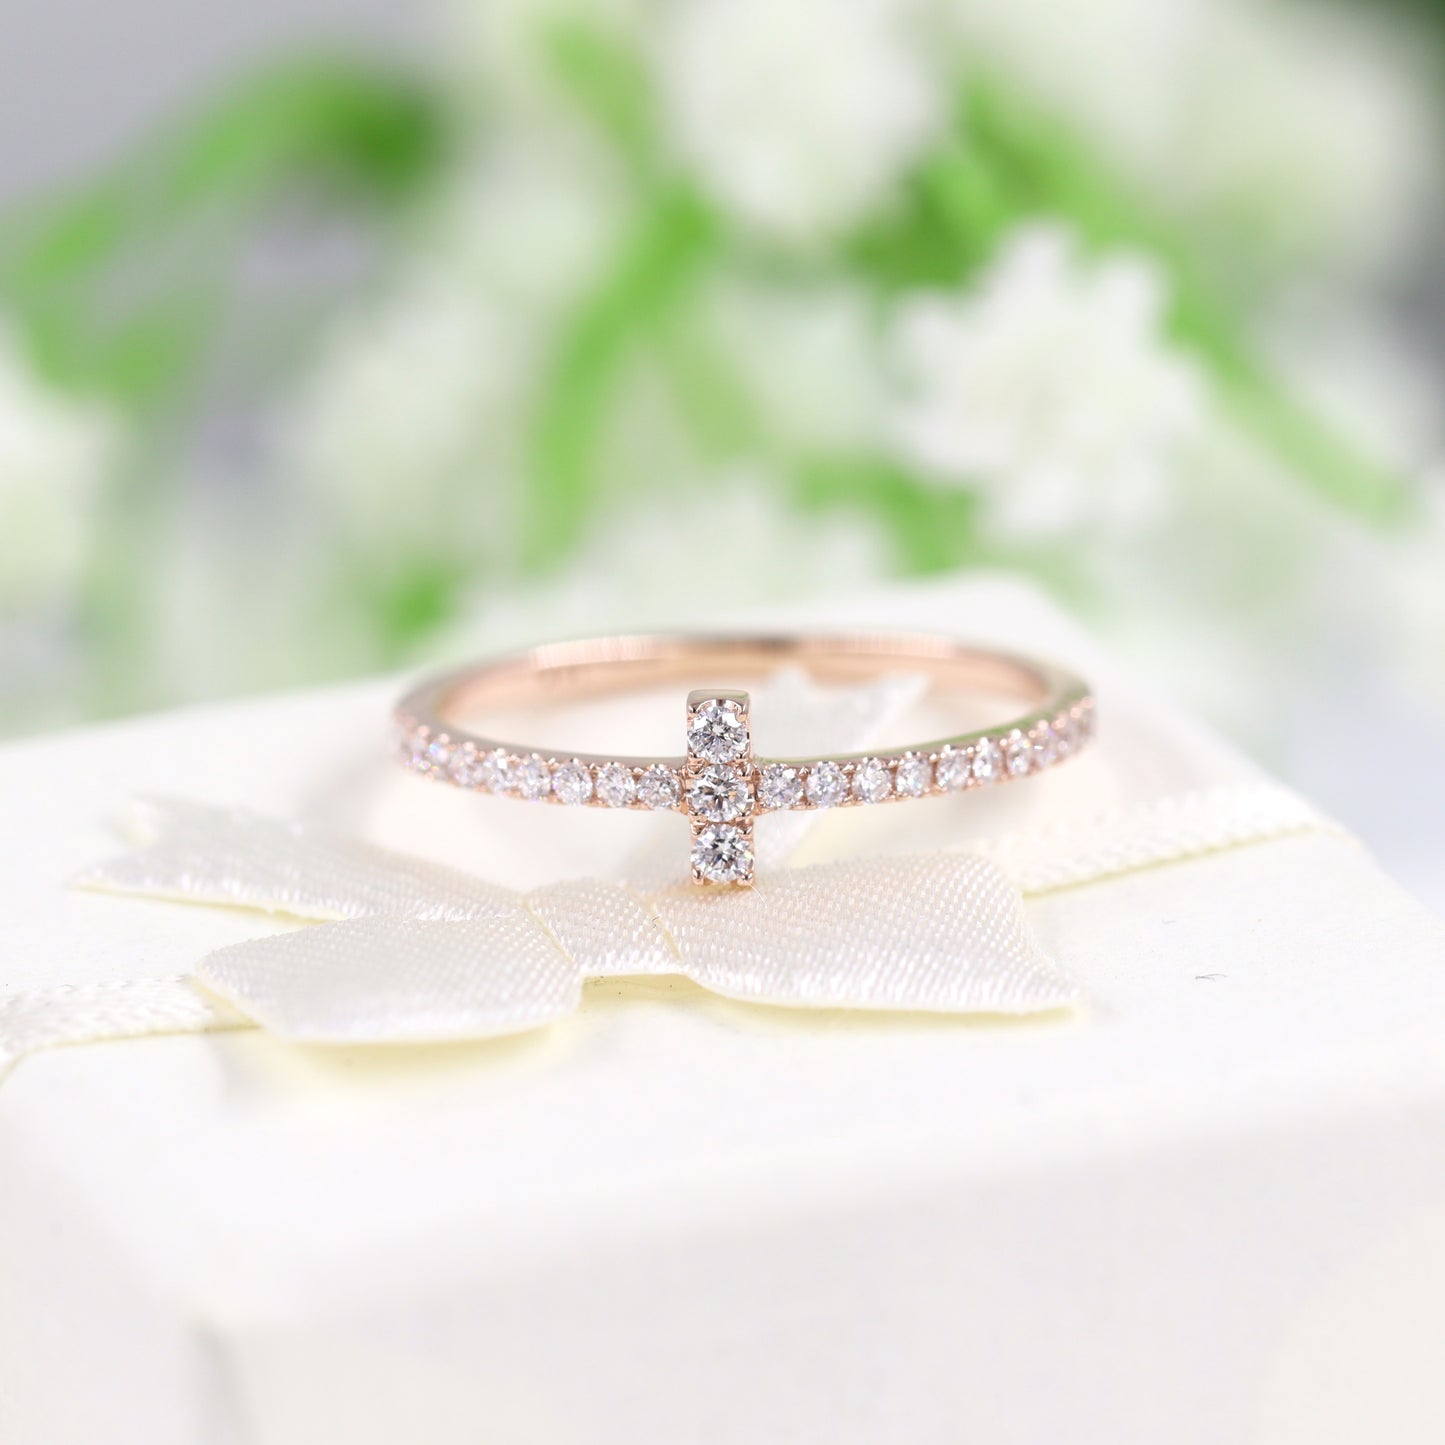 Dainty Diamond Ring / Anniversary Diamond Ring / 14K gold Diamond Ring / Religious Ring / Holy Cross Ring / Minimalist Ring / Gift for her